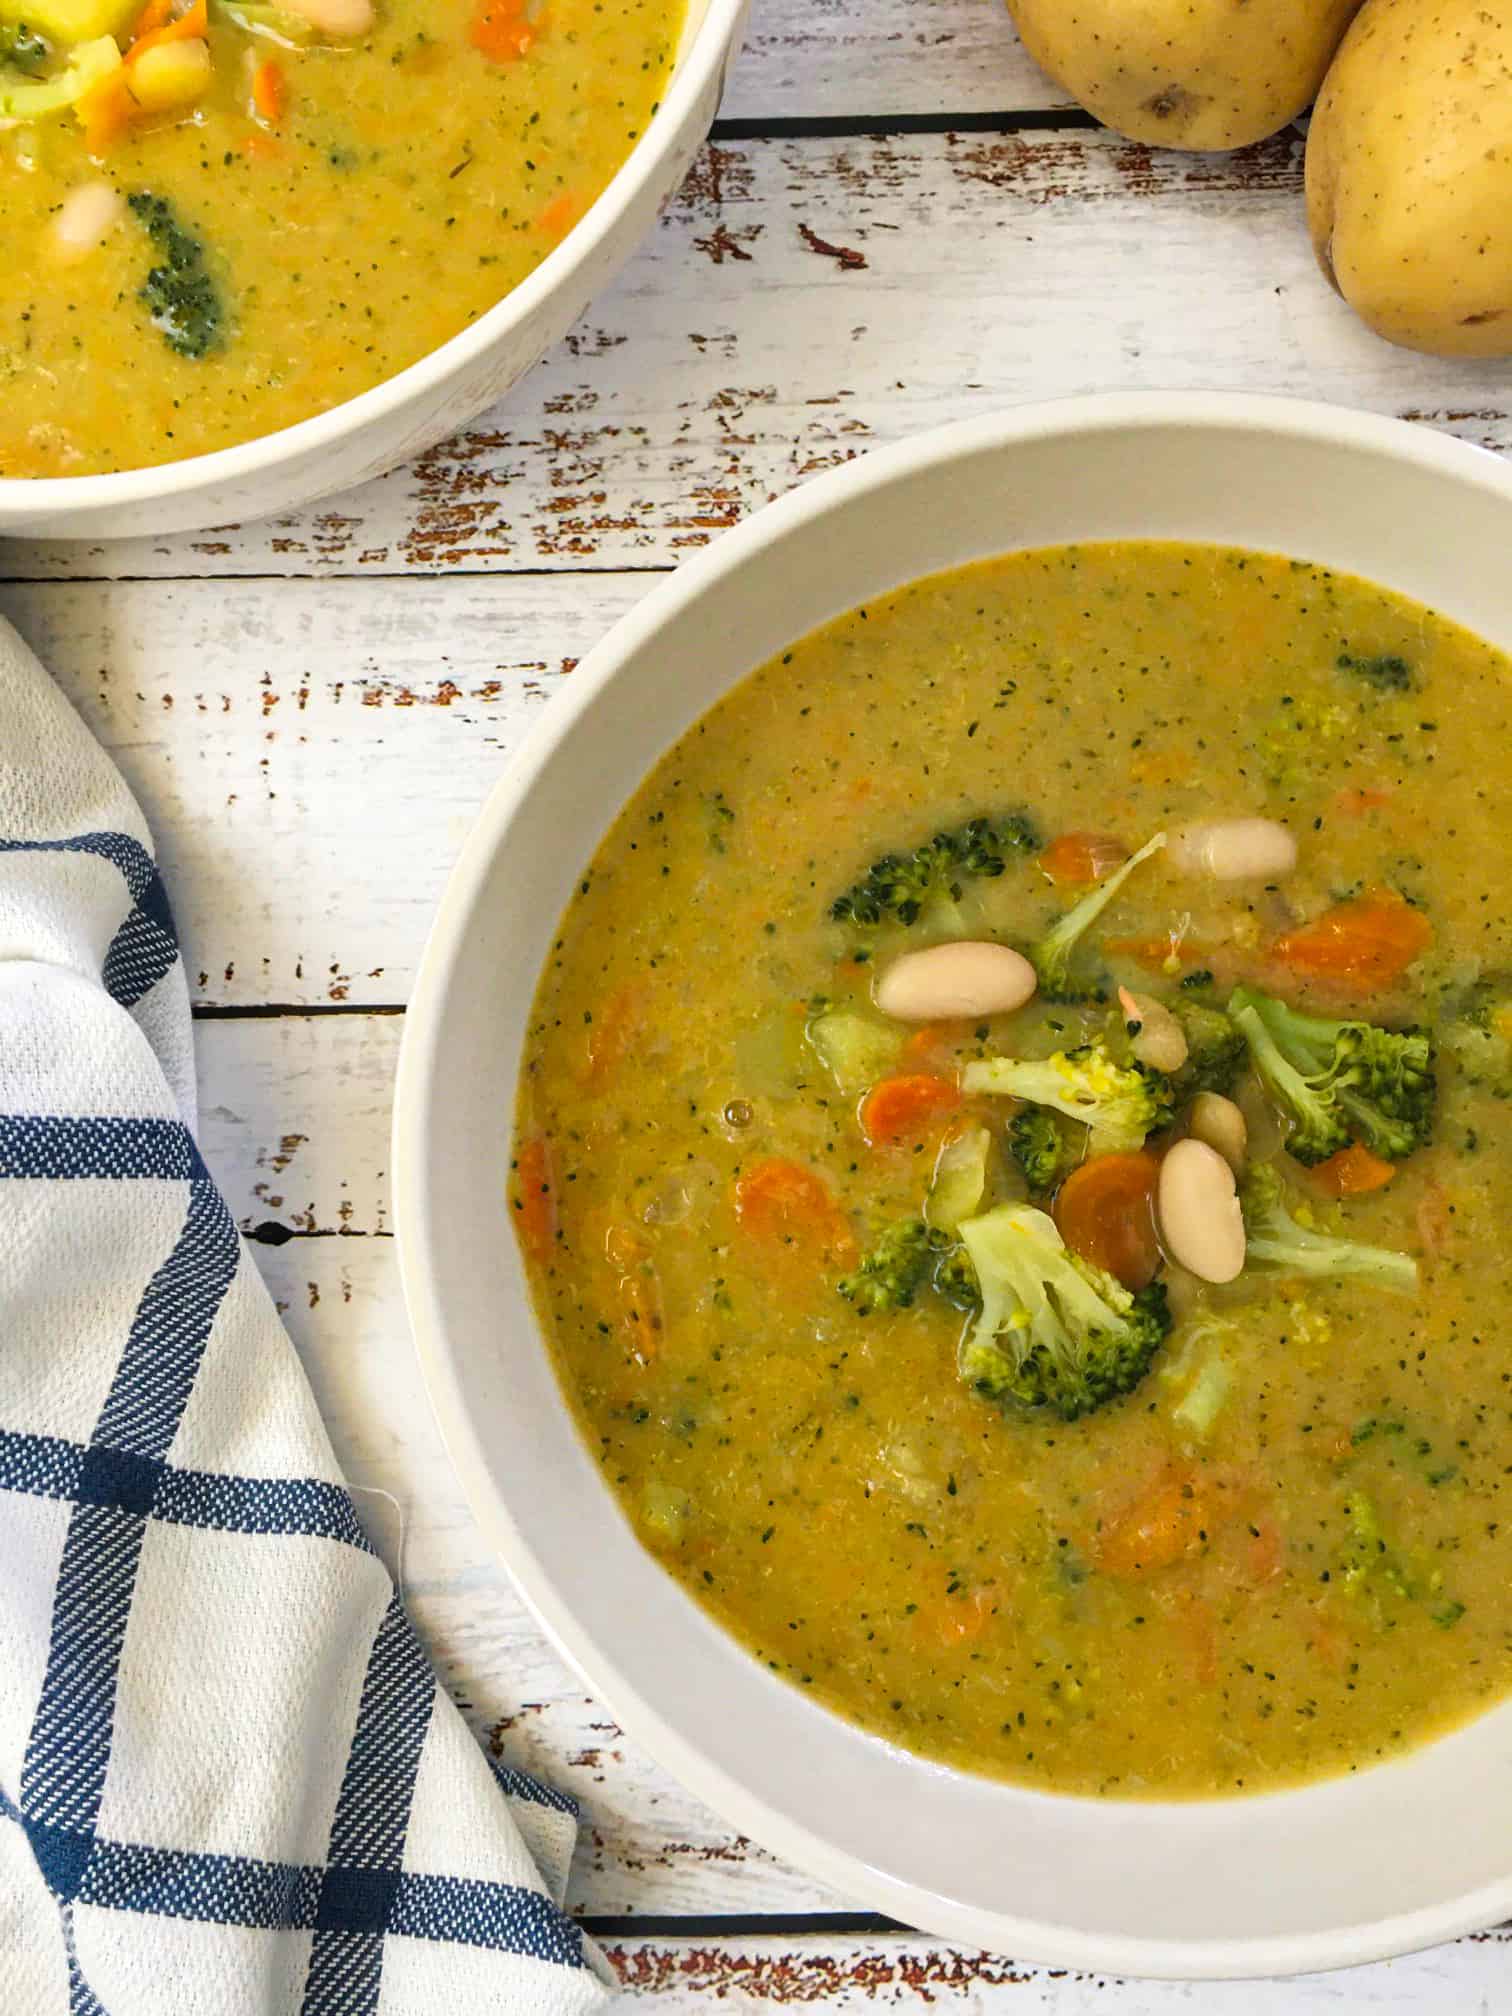 bowl of broccoli potato soup with broccoli, carrot and white bean garnish